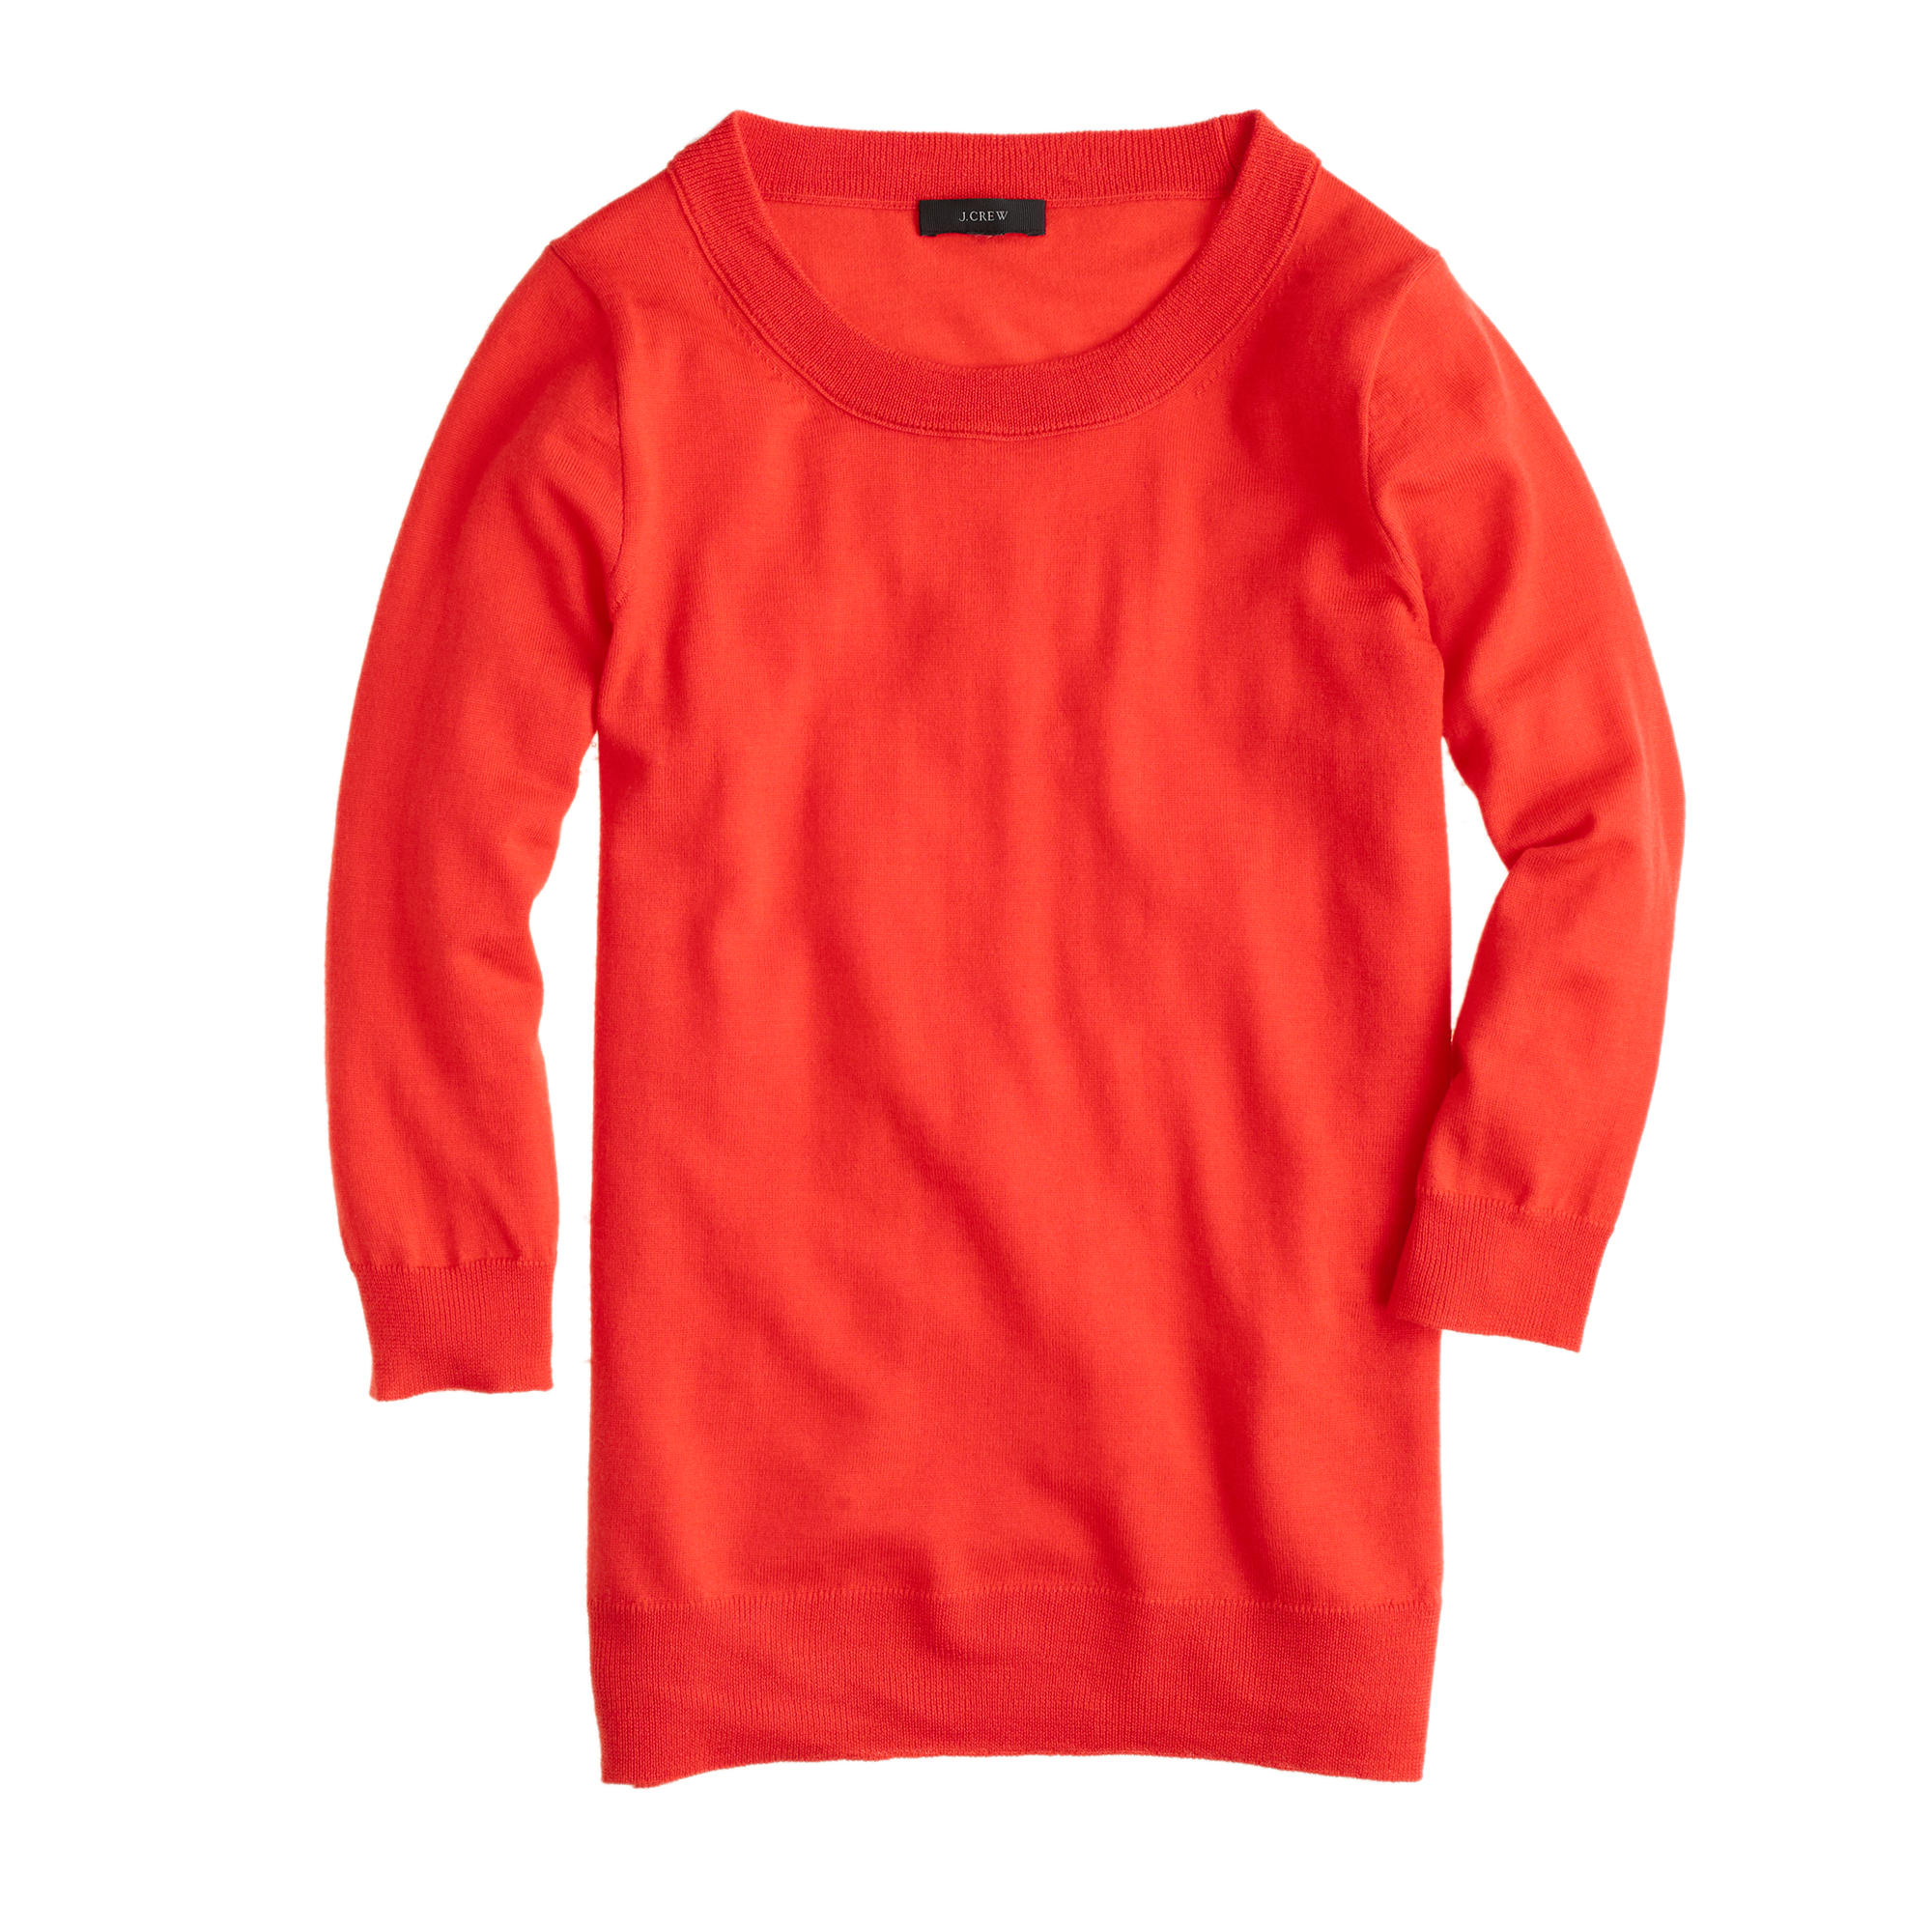 Lyst - J.Crew Merino Wool Tippi Sweater in Red